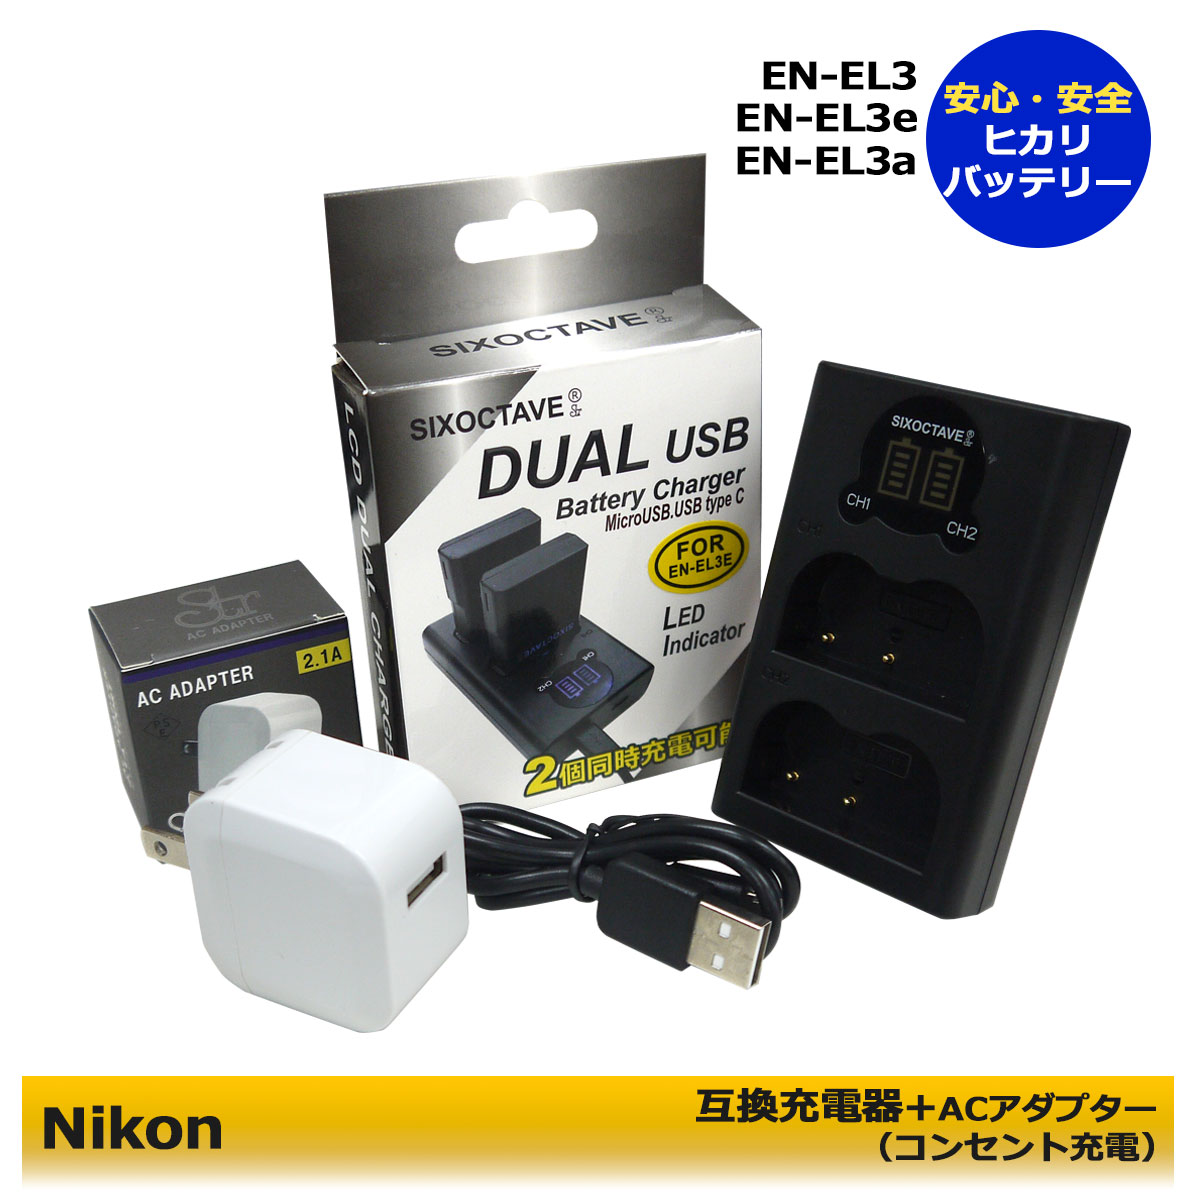 新色追加 ニコン EN-EL3 EN-EL3a 急速充電器 USBケーブル付き 互換